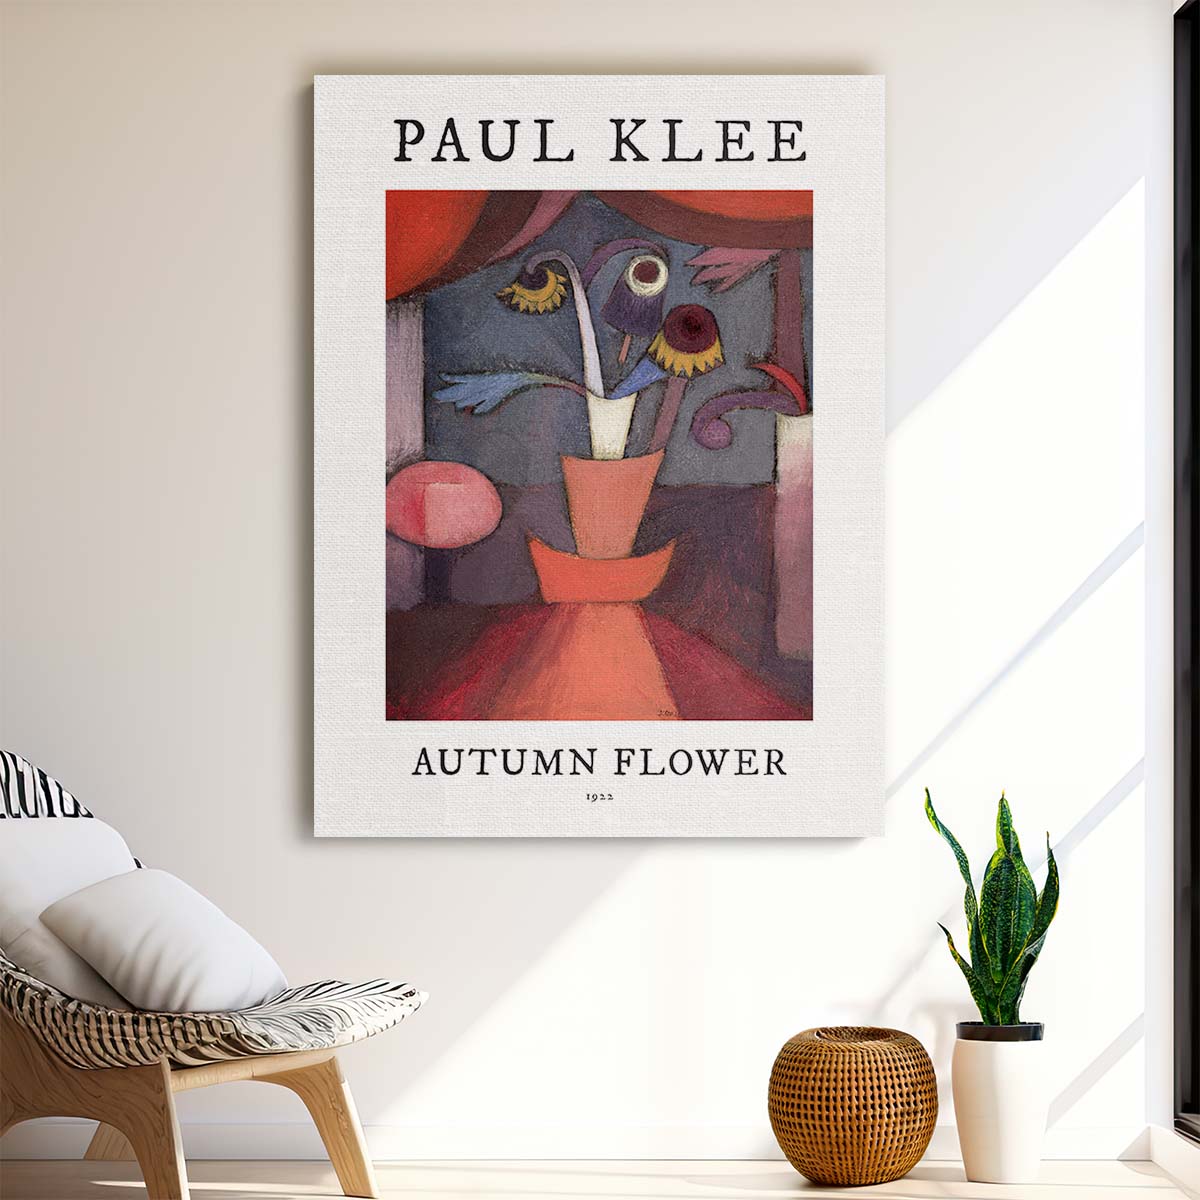 Paul Klee's 1922 Autumn Flower Modern Art Illustration by Luxuriance Designs, made in USA